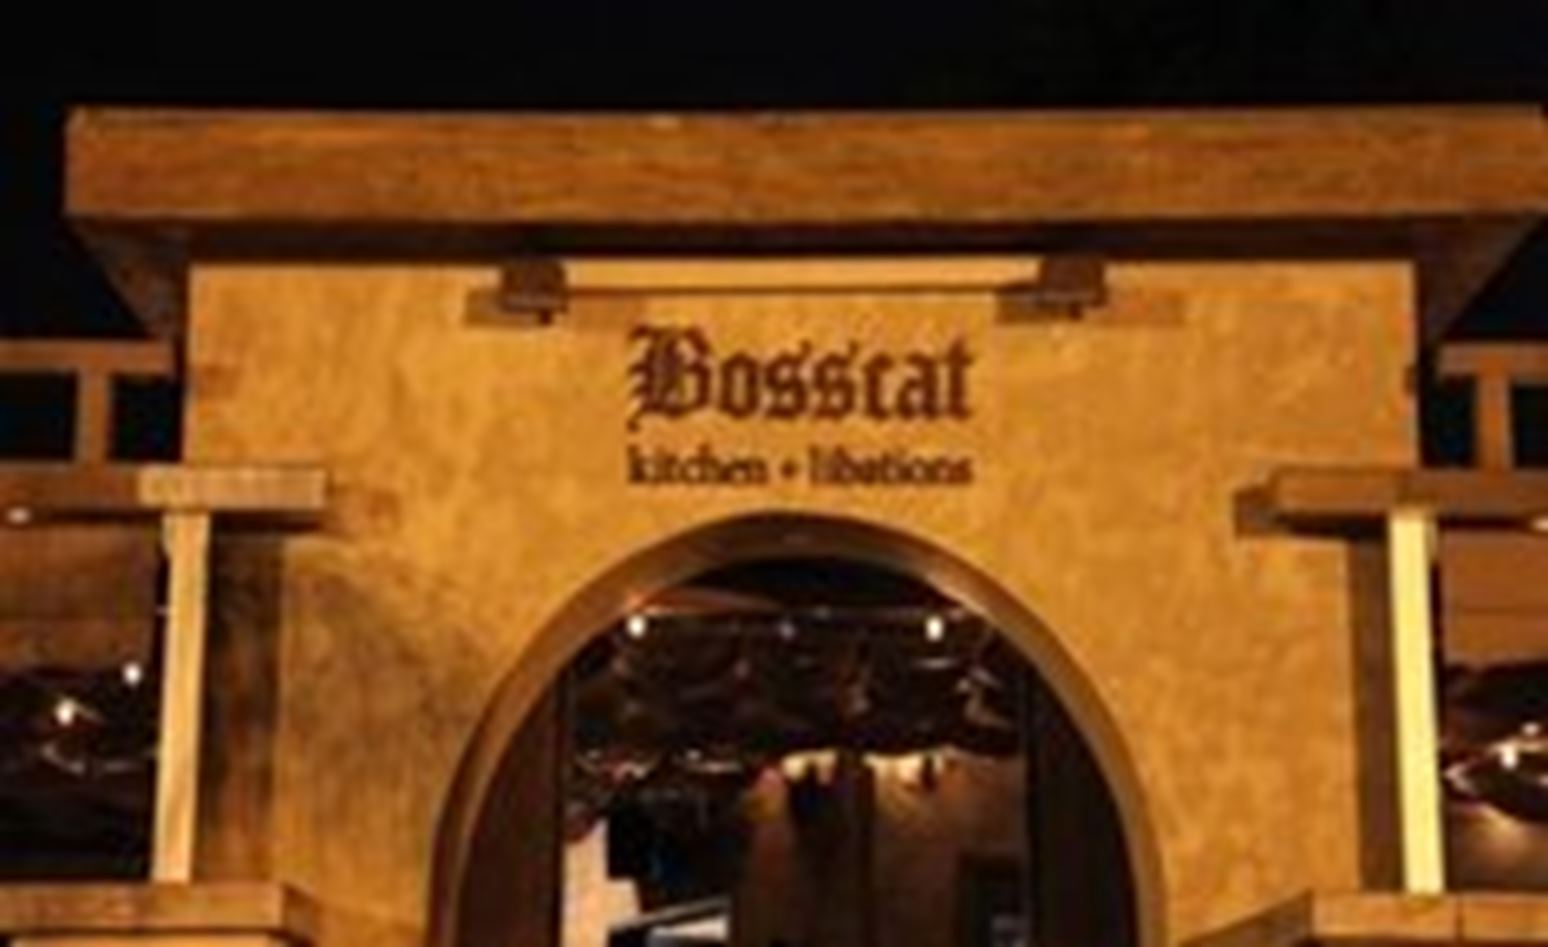 Rsz _bosscat -kitchen -libations